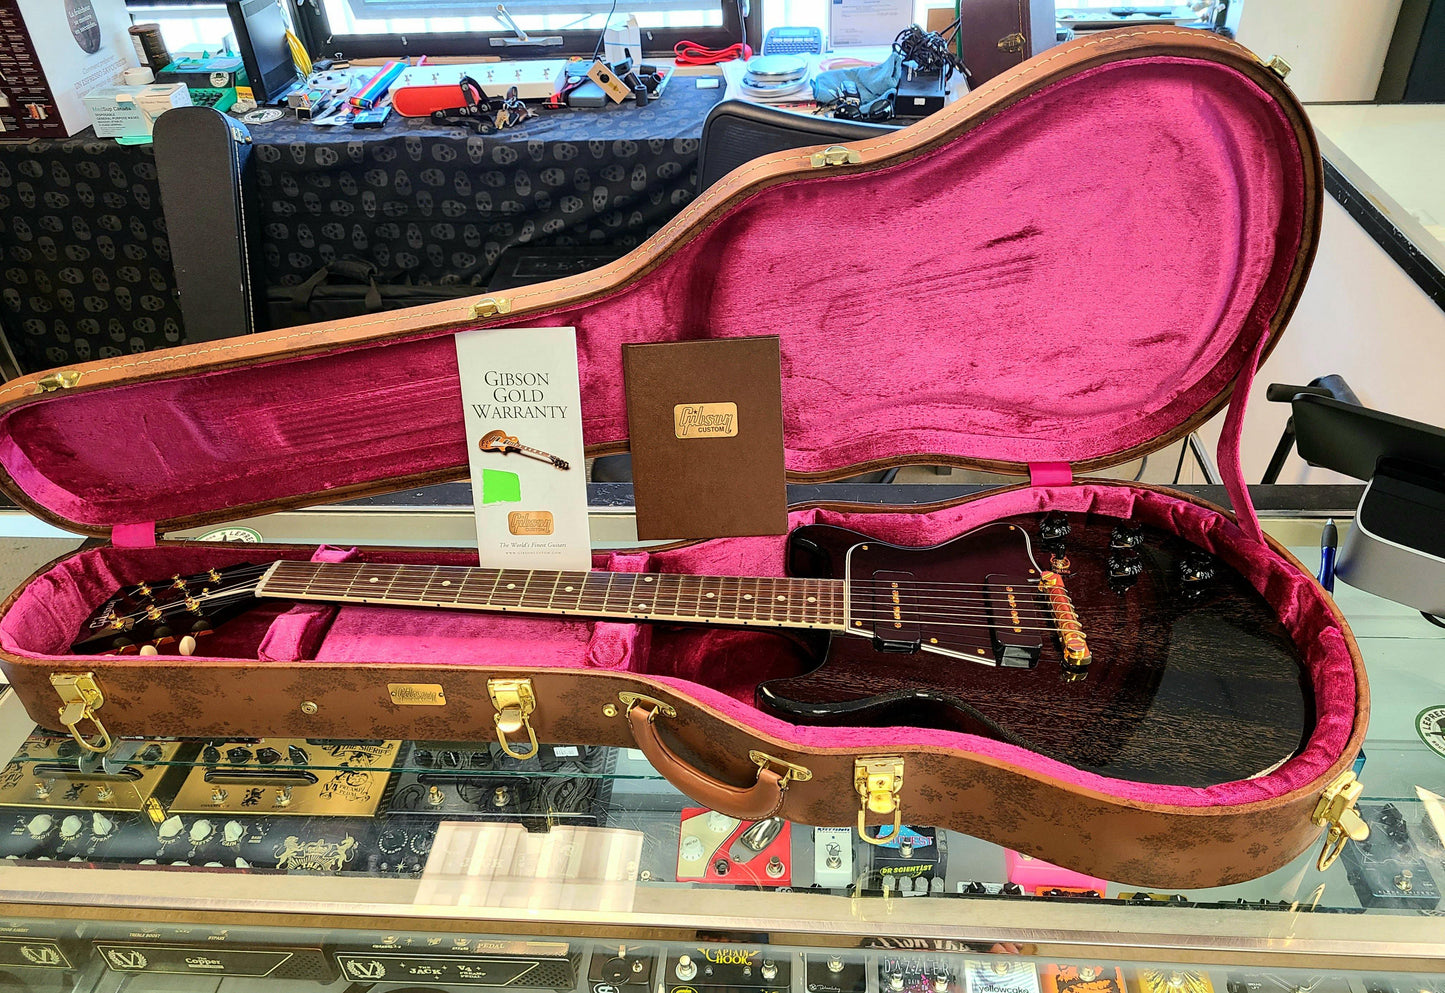 USED Gibson Custom Shop Les Paul Special TV Black Gold 2017 - Guitar Brando